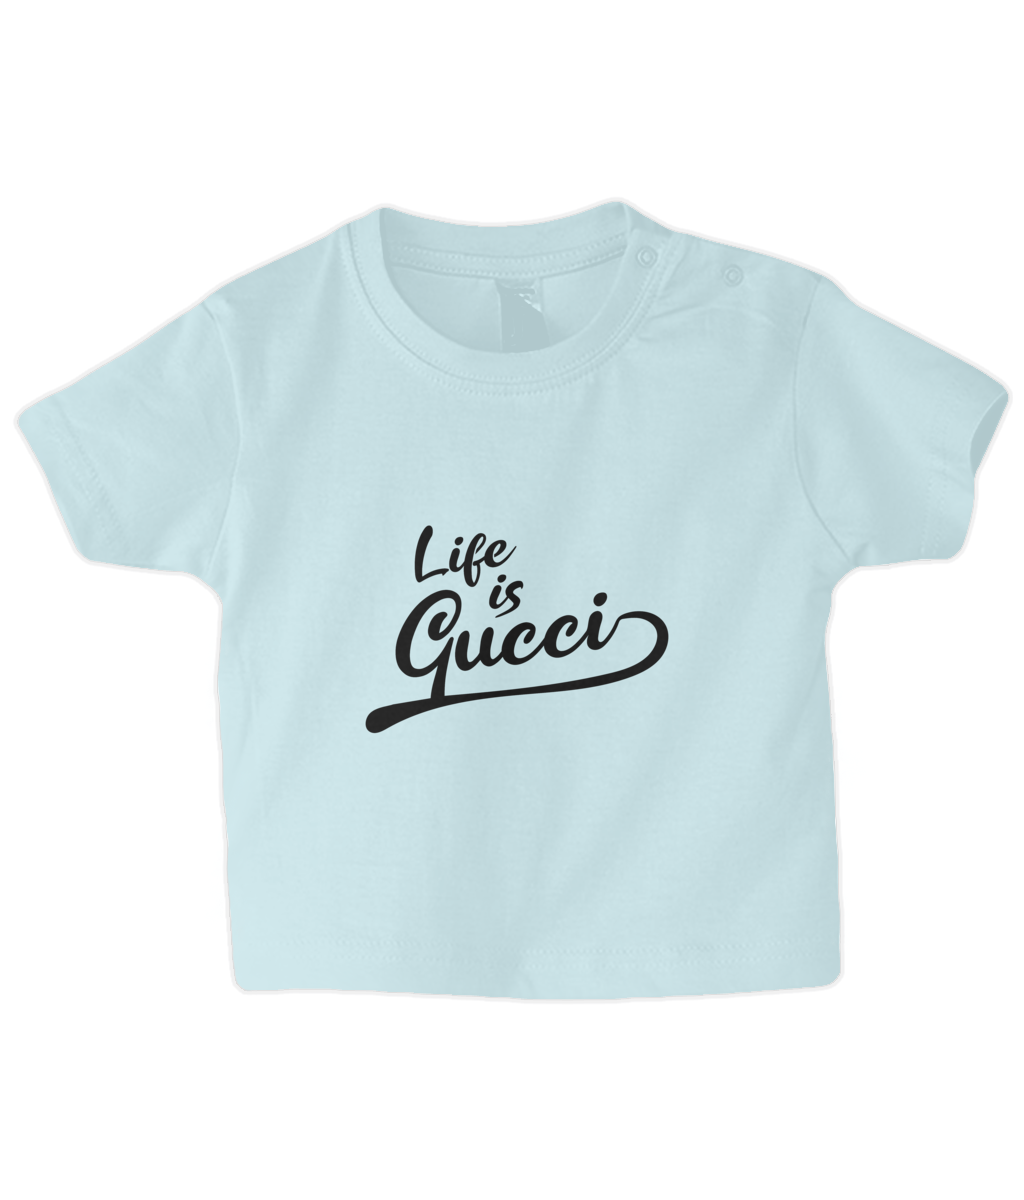 life's gucci shirt